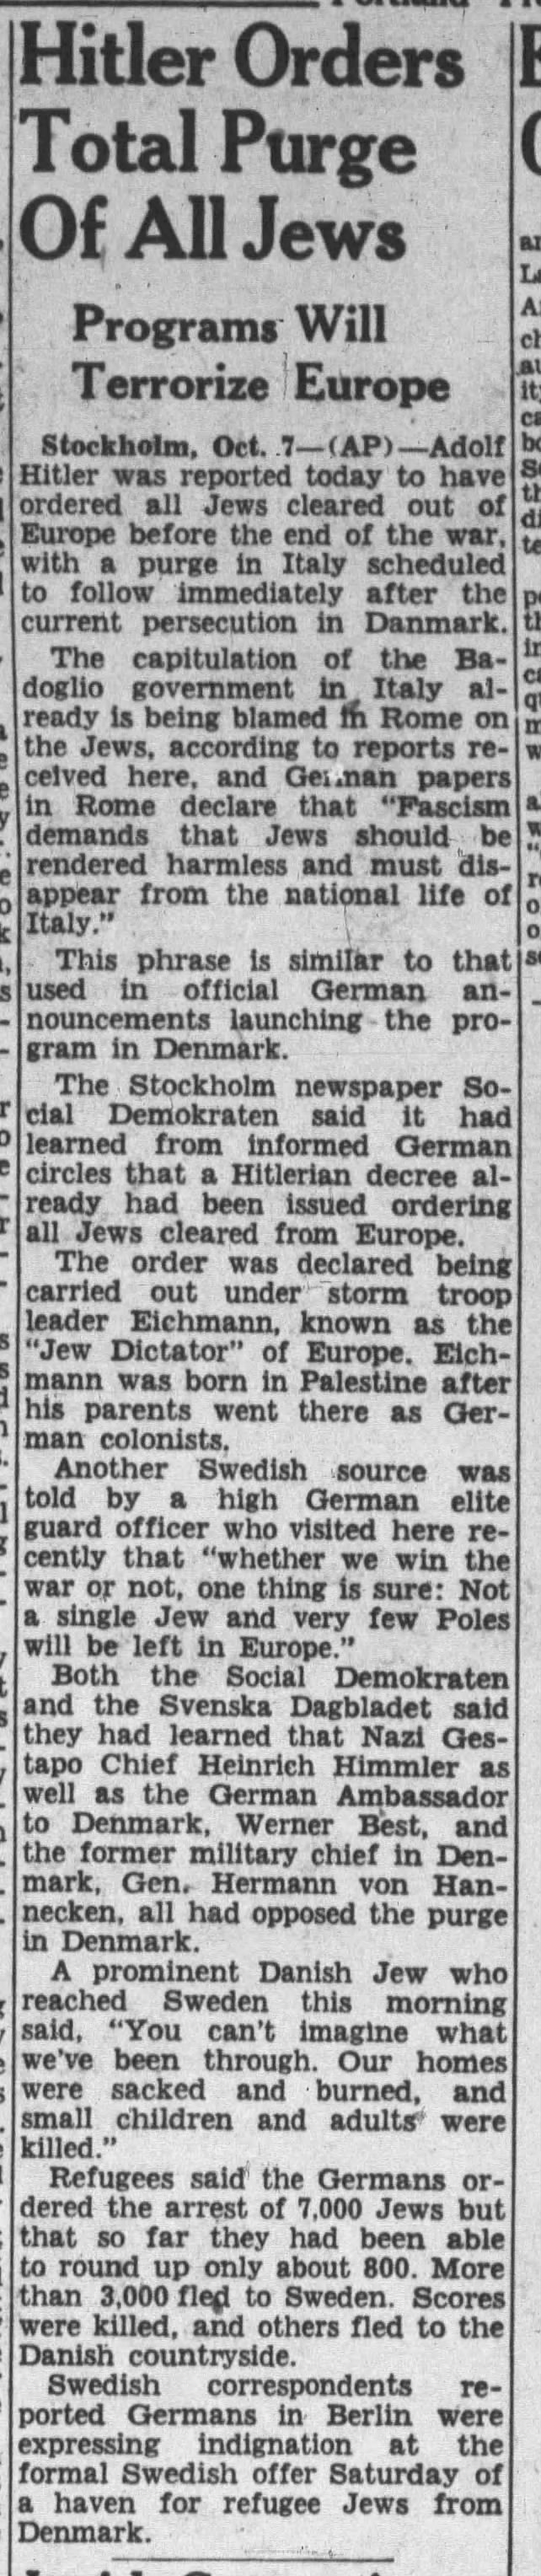 Hitler Orders Total Purge Of All Jews